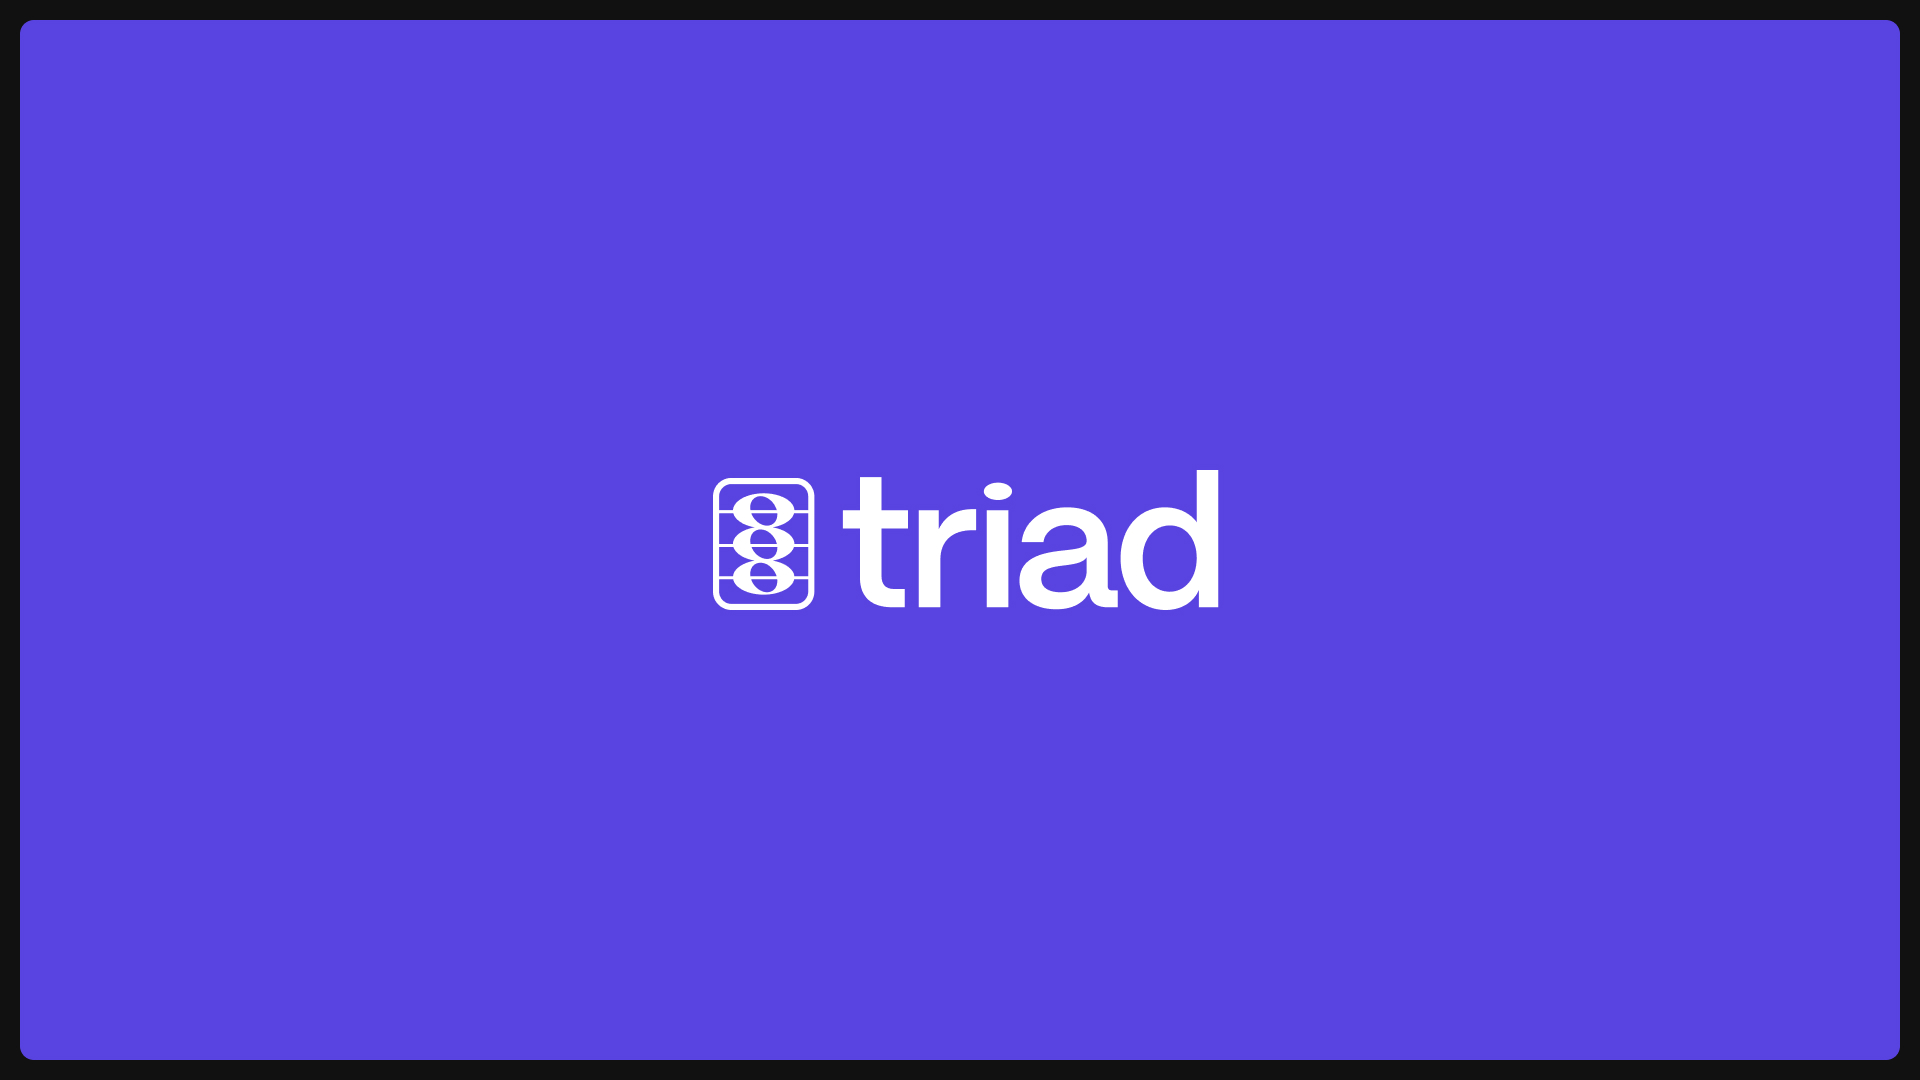 Triad_Branding_1